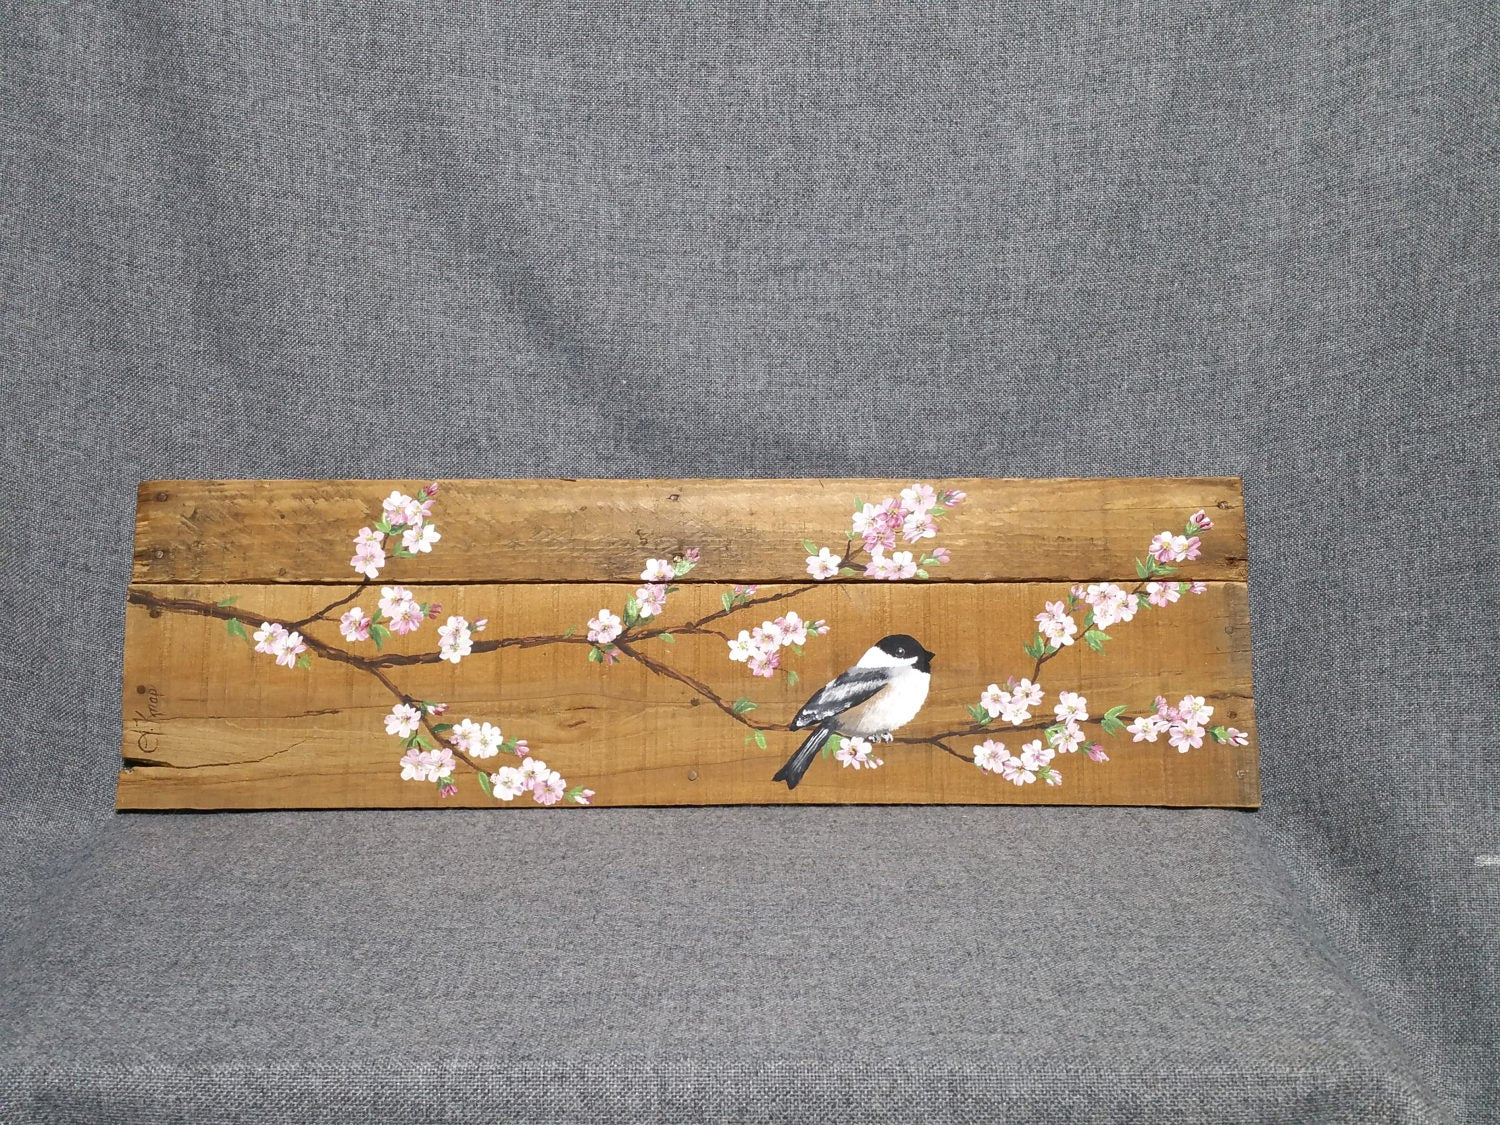 Spring flower apple blossom painting on pallet wood, hand painted chickadee bird